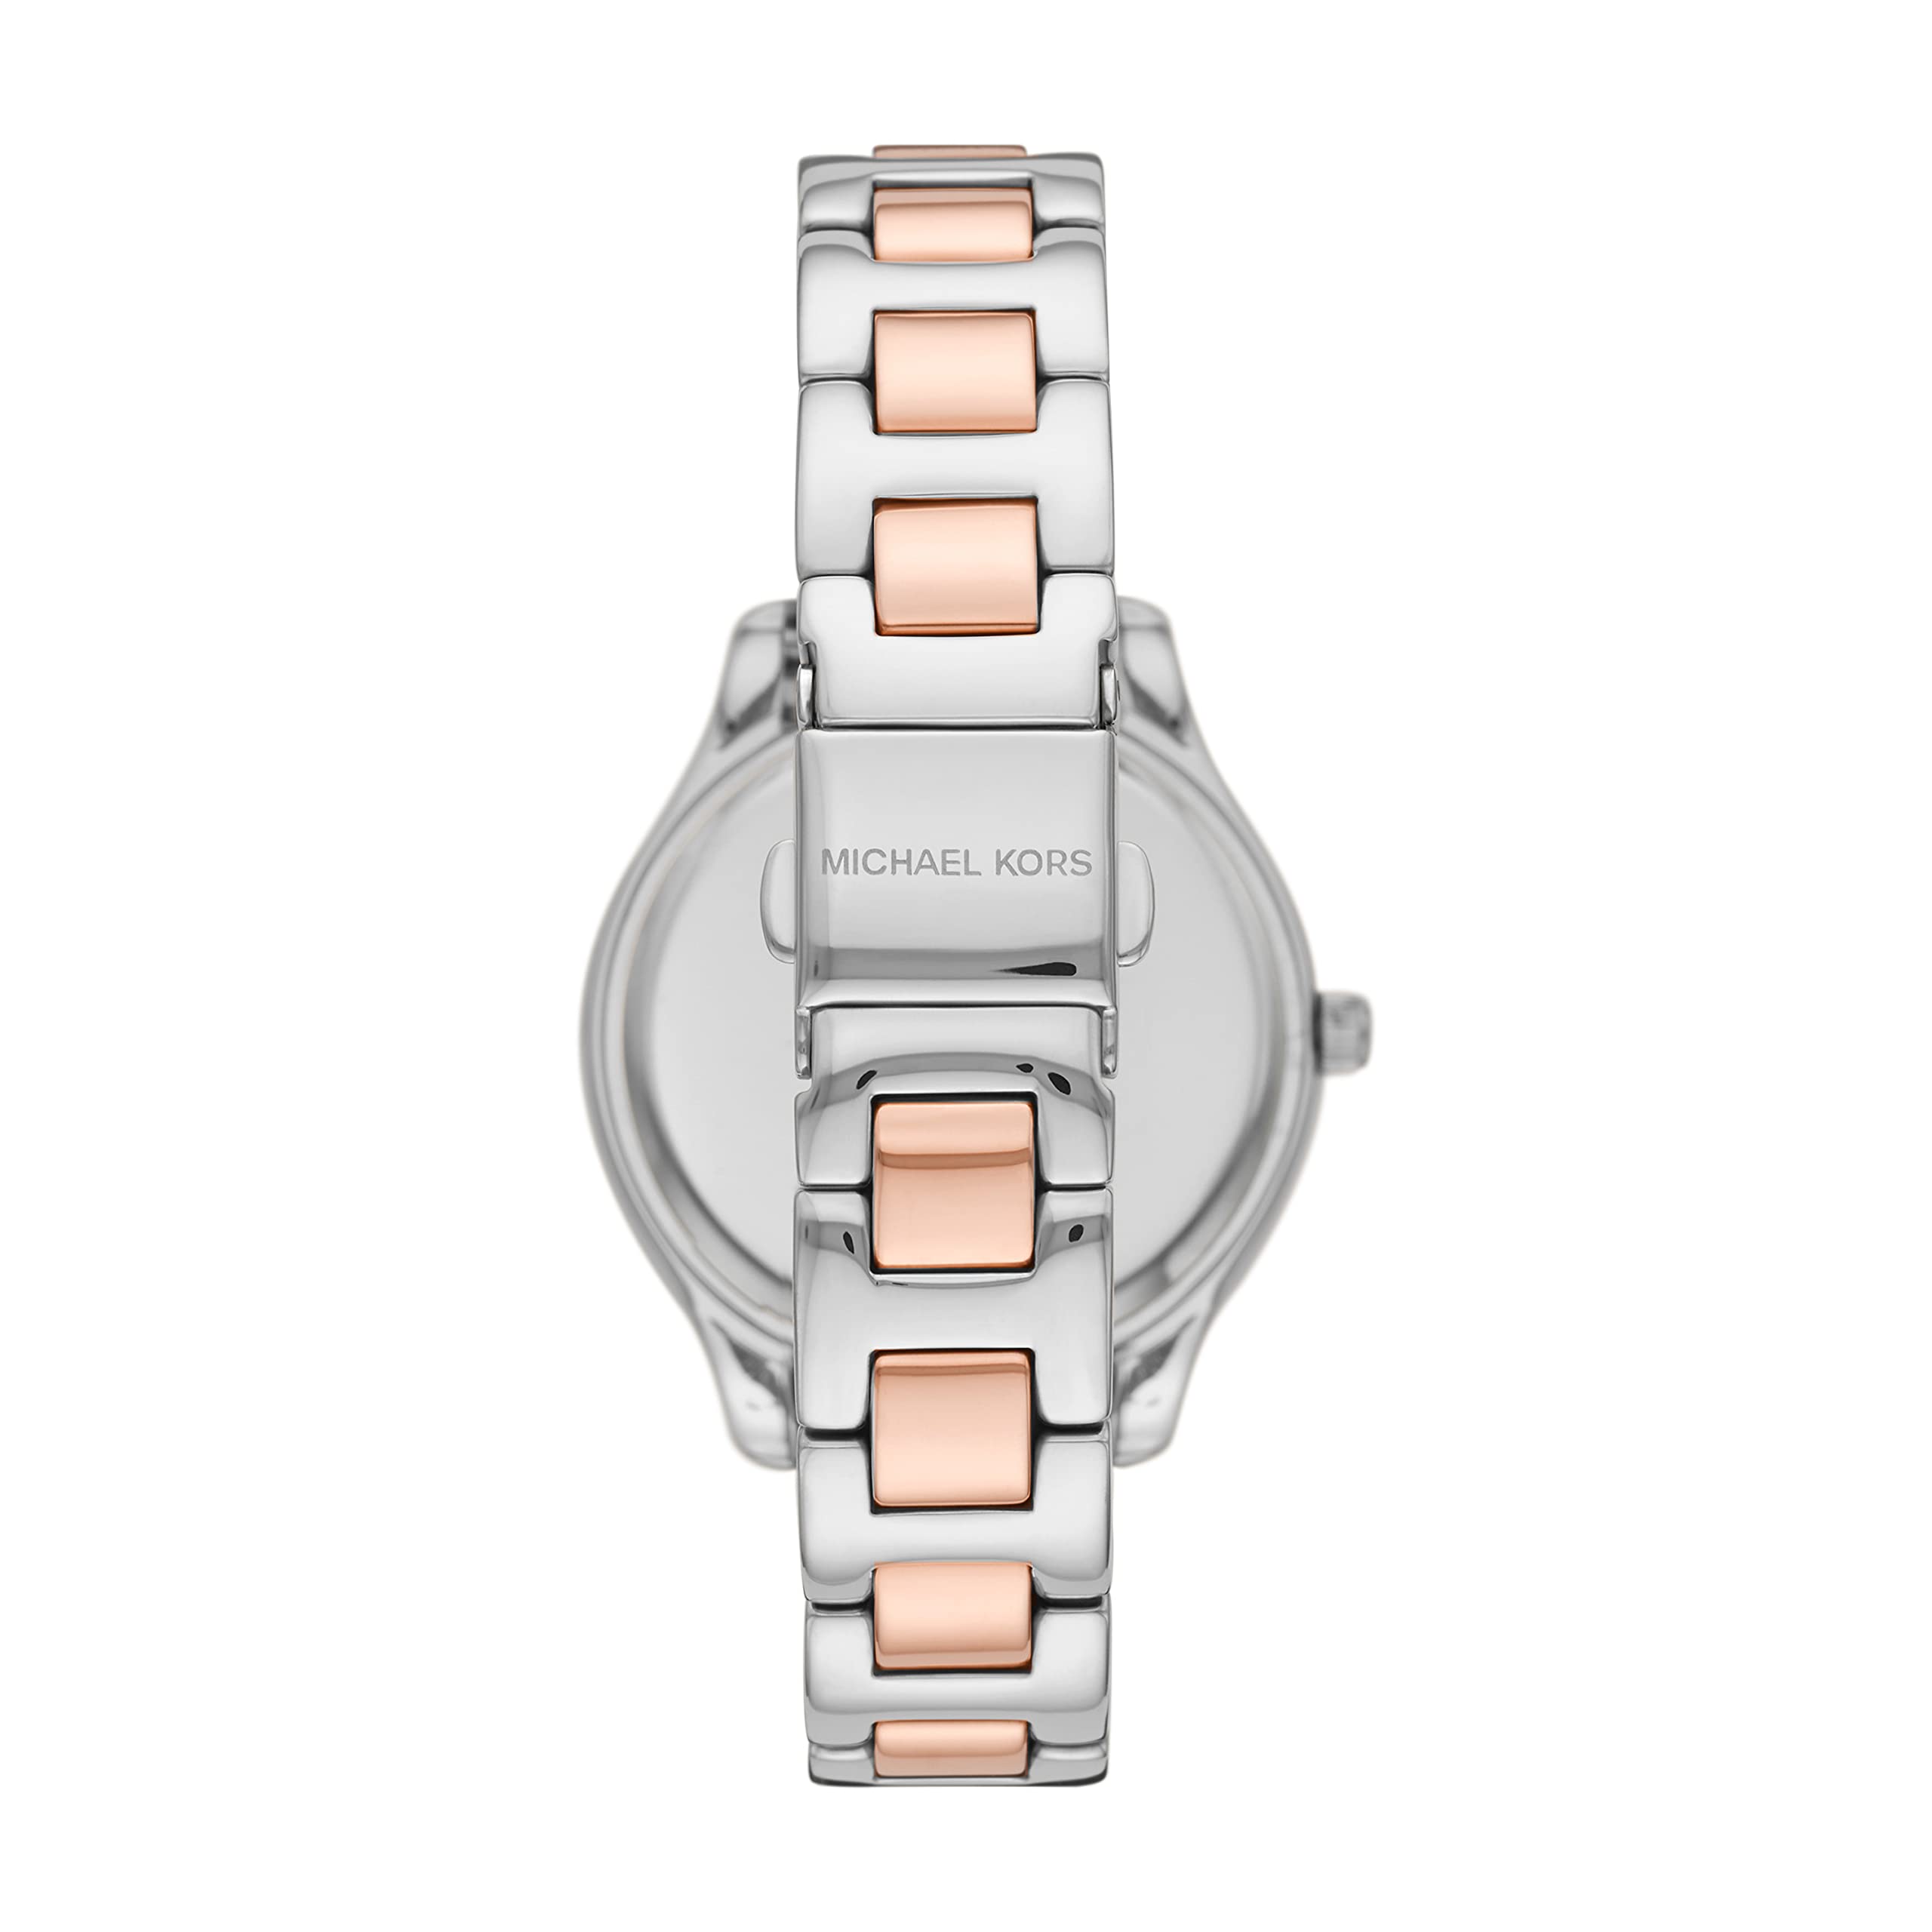 Michael Kors Women's Liliane Quartz Watch with Stainless Steel Strap